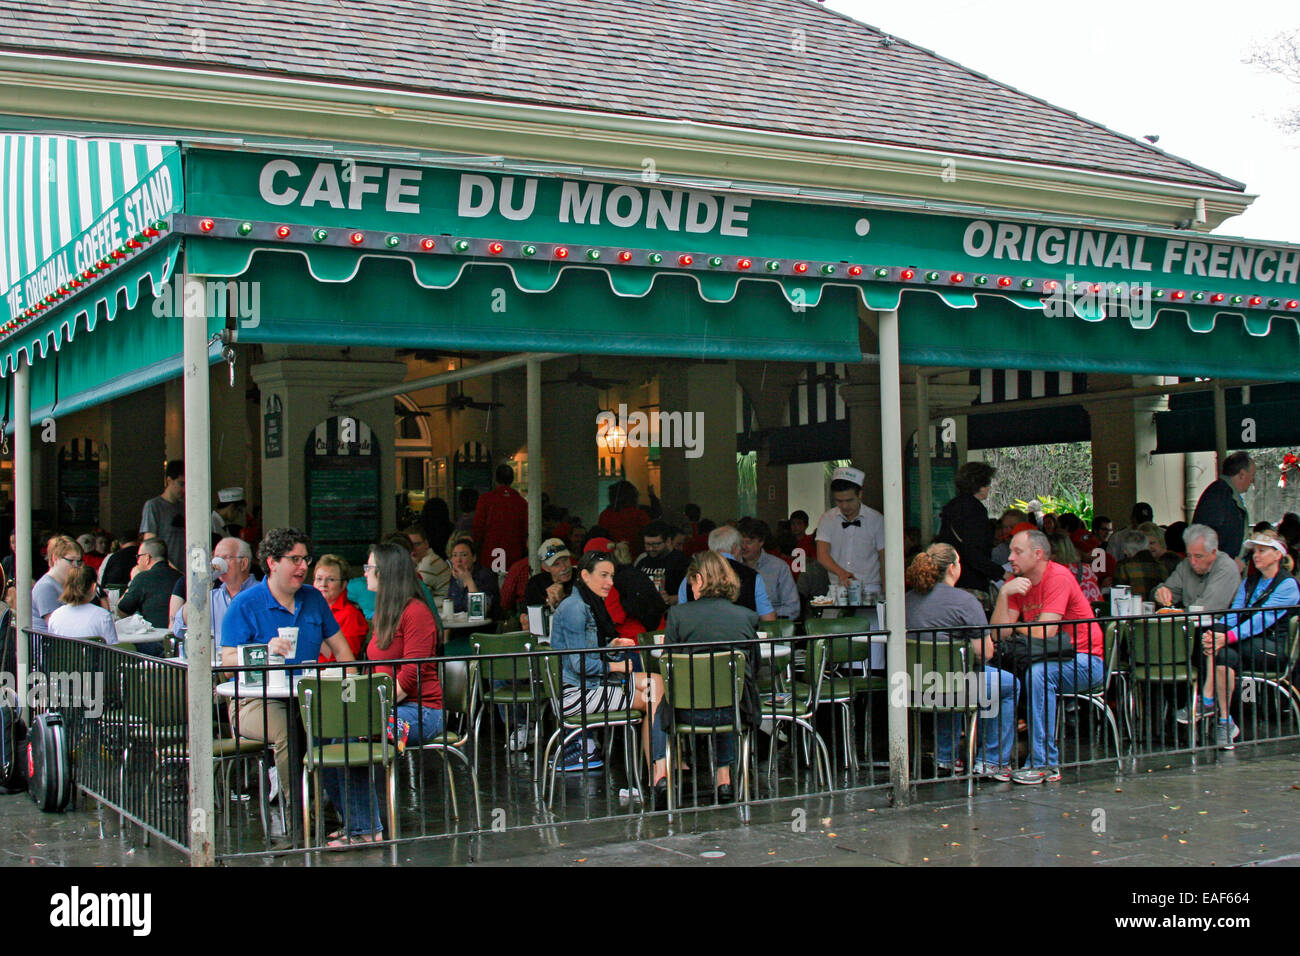 Café du Monde - French Quarter - 1554 tips from 92472 visitors